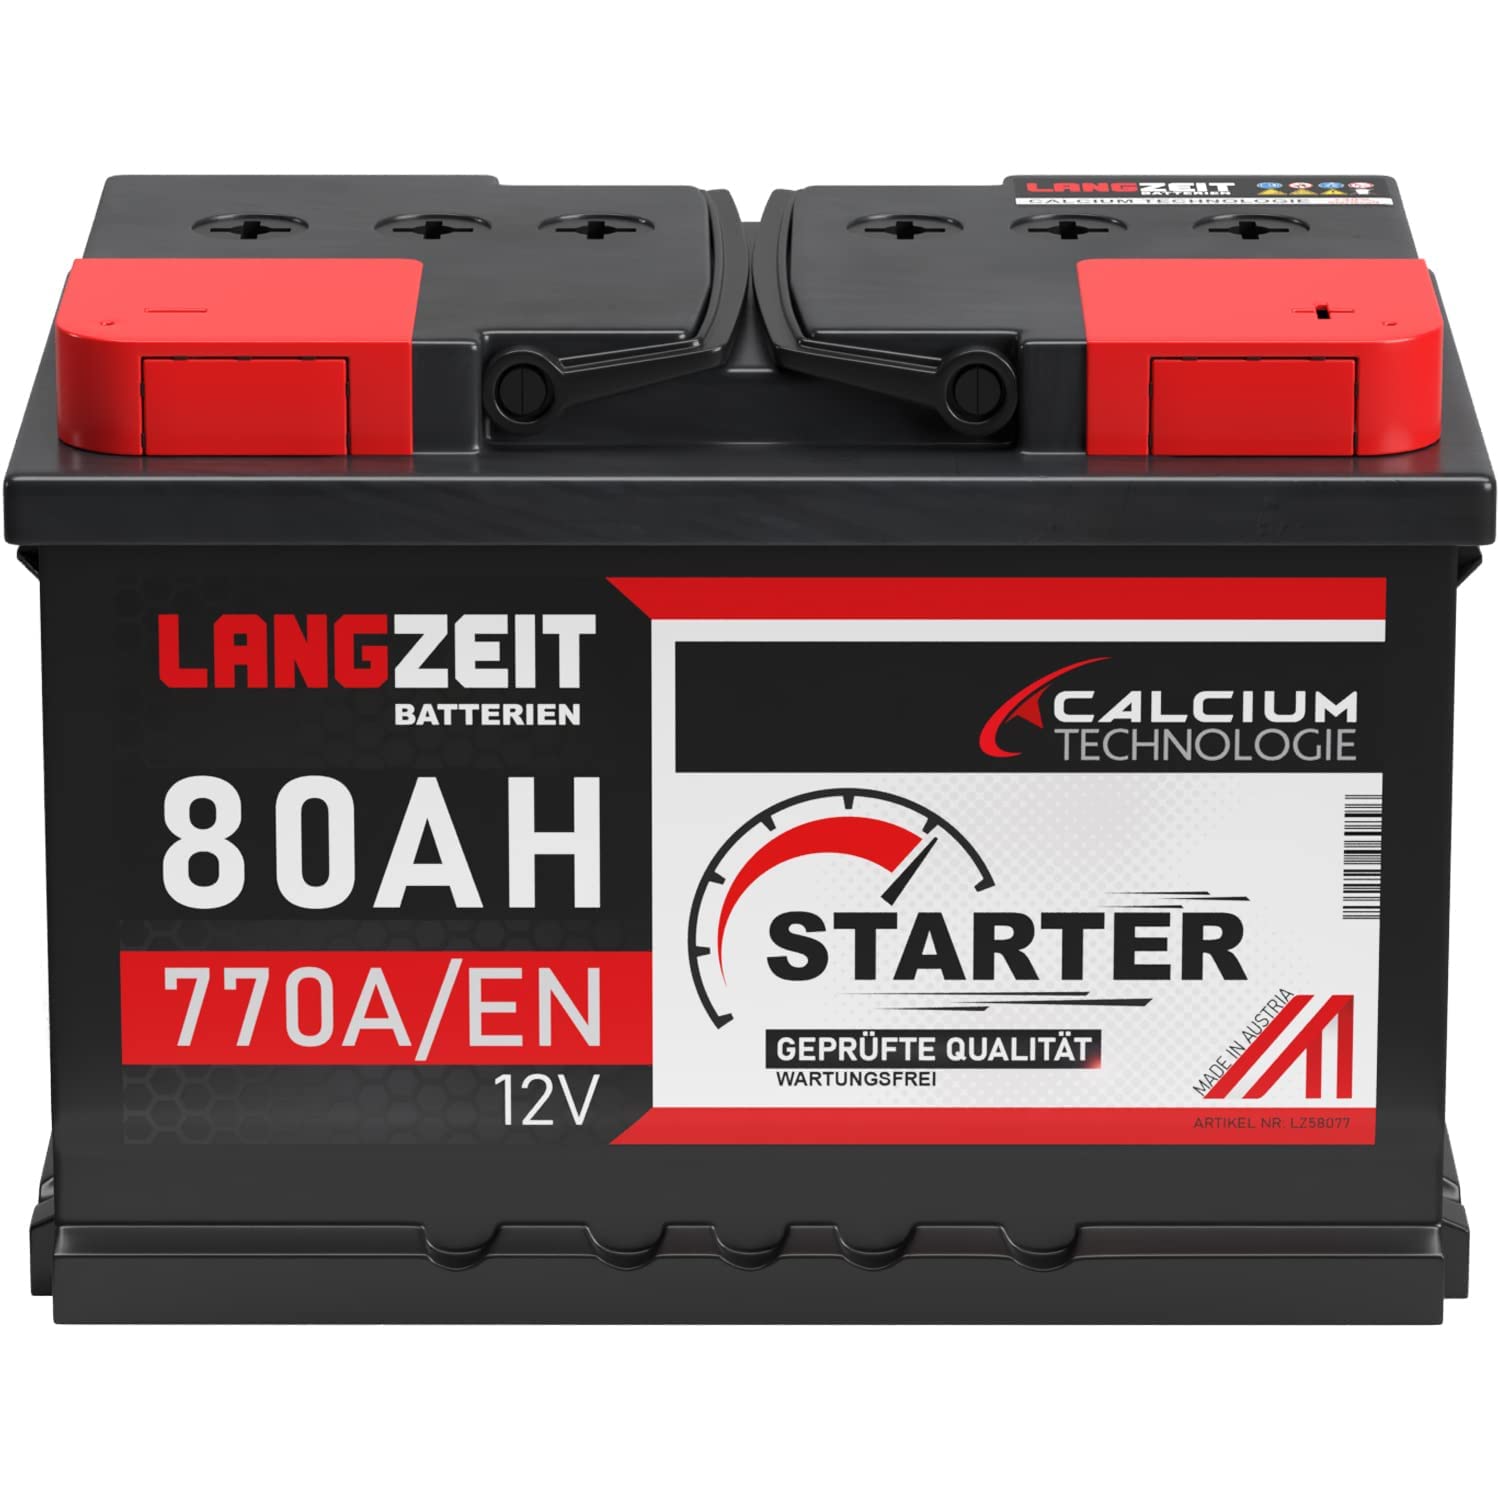 LANGZEIT Autobatterie 80Ah 12V 770A/EN Starterbatterie +30% mehr Leistung ersetzt Batterie 74Ah 72Ah 75Ah 77Ah 85Ah von LANGZEIT Batterien